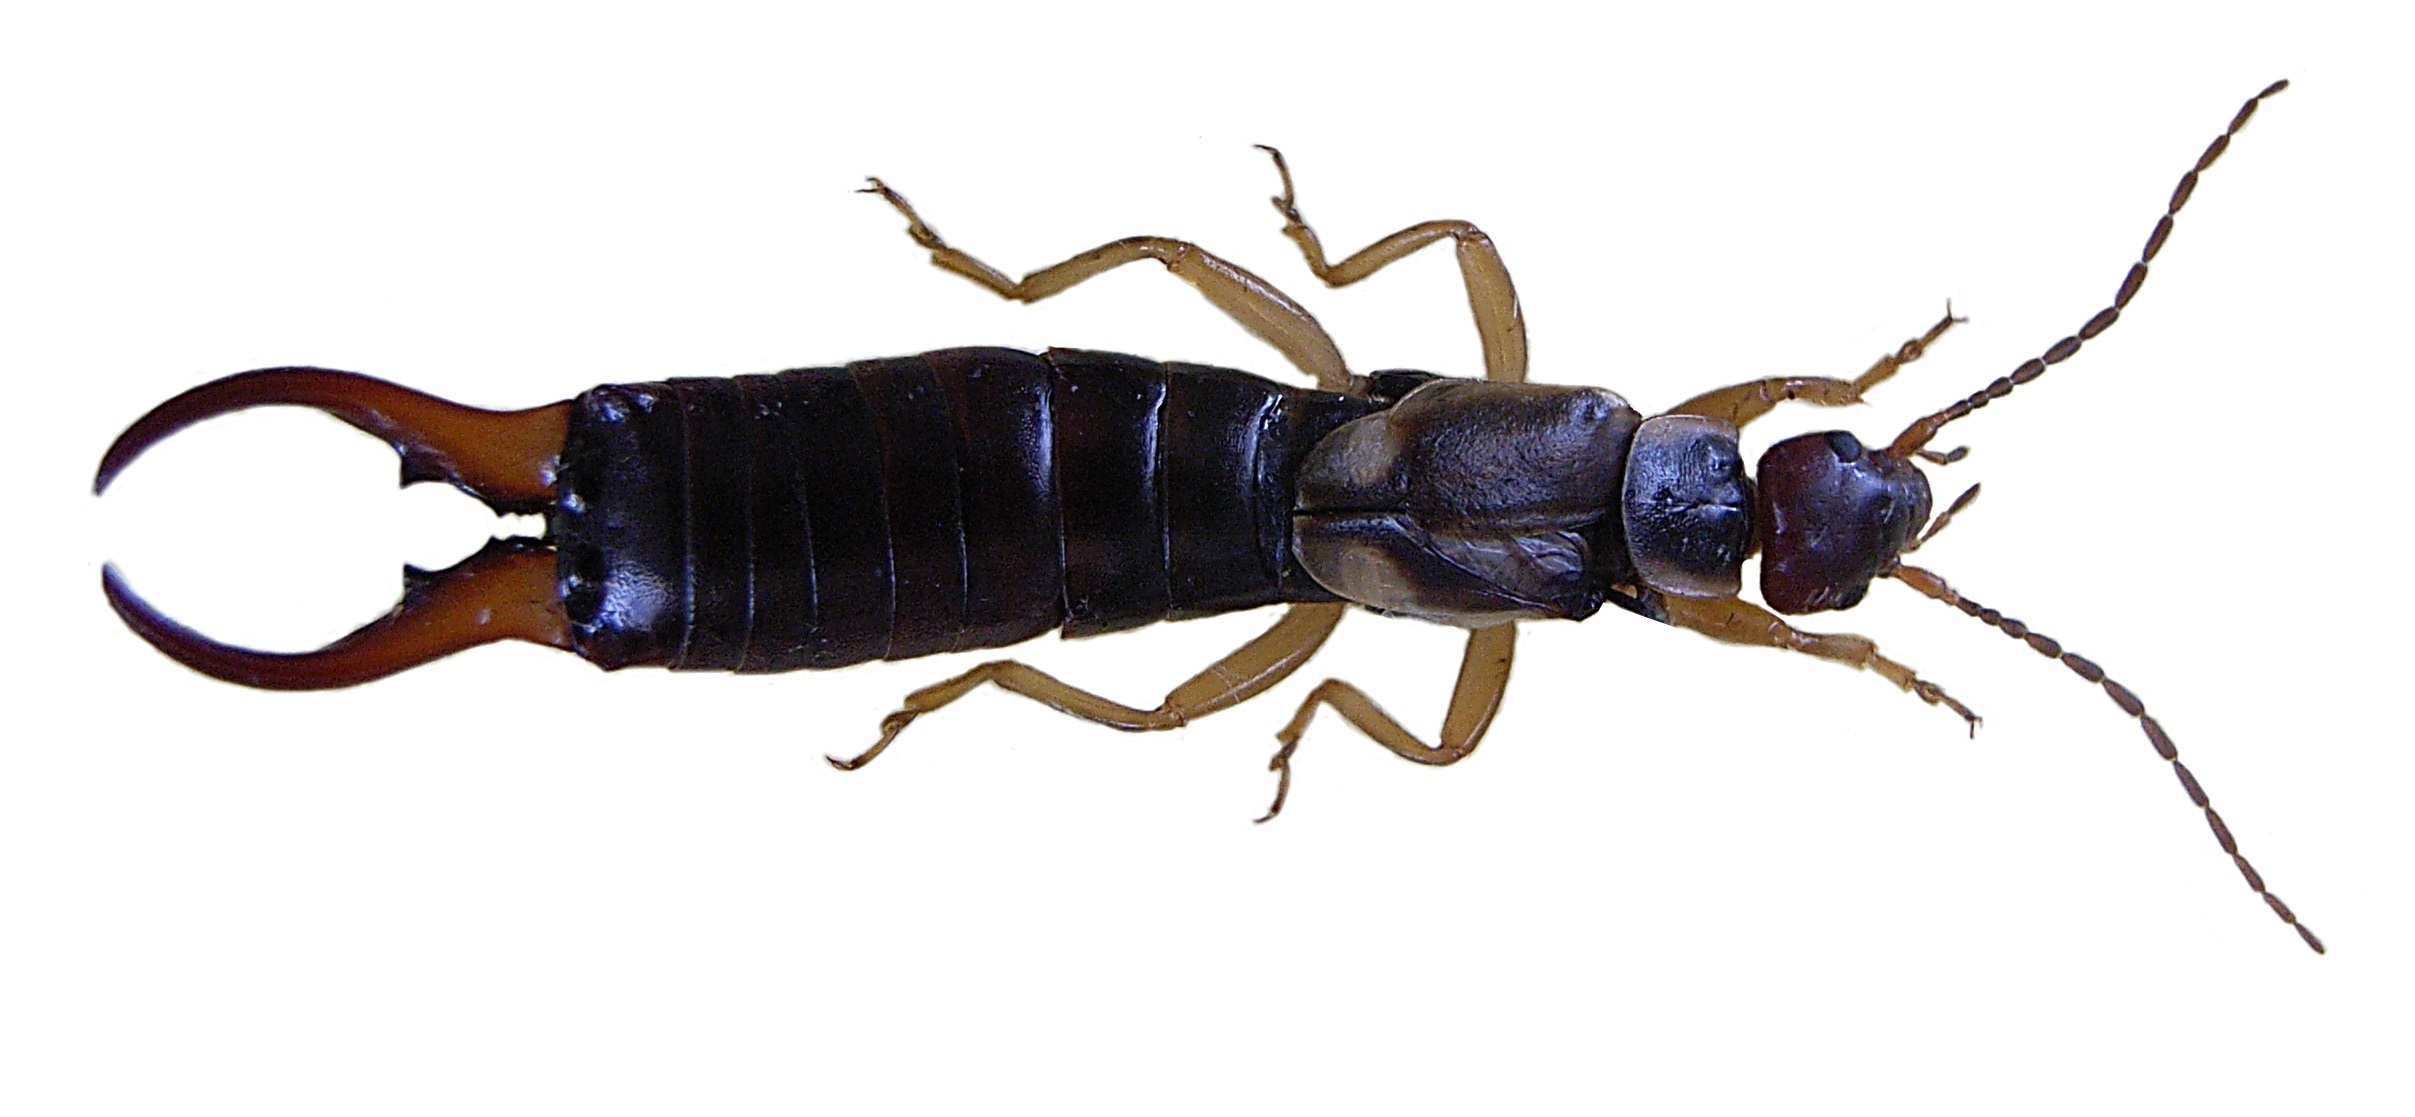 earwigs bugs bug pinch pincer earwig insects pest control roseburg exterminator beetles oregon stink elder box winter which